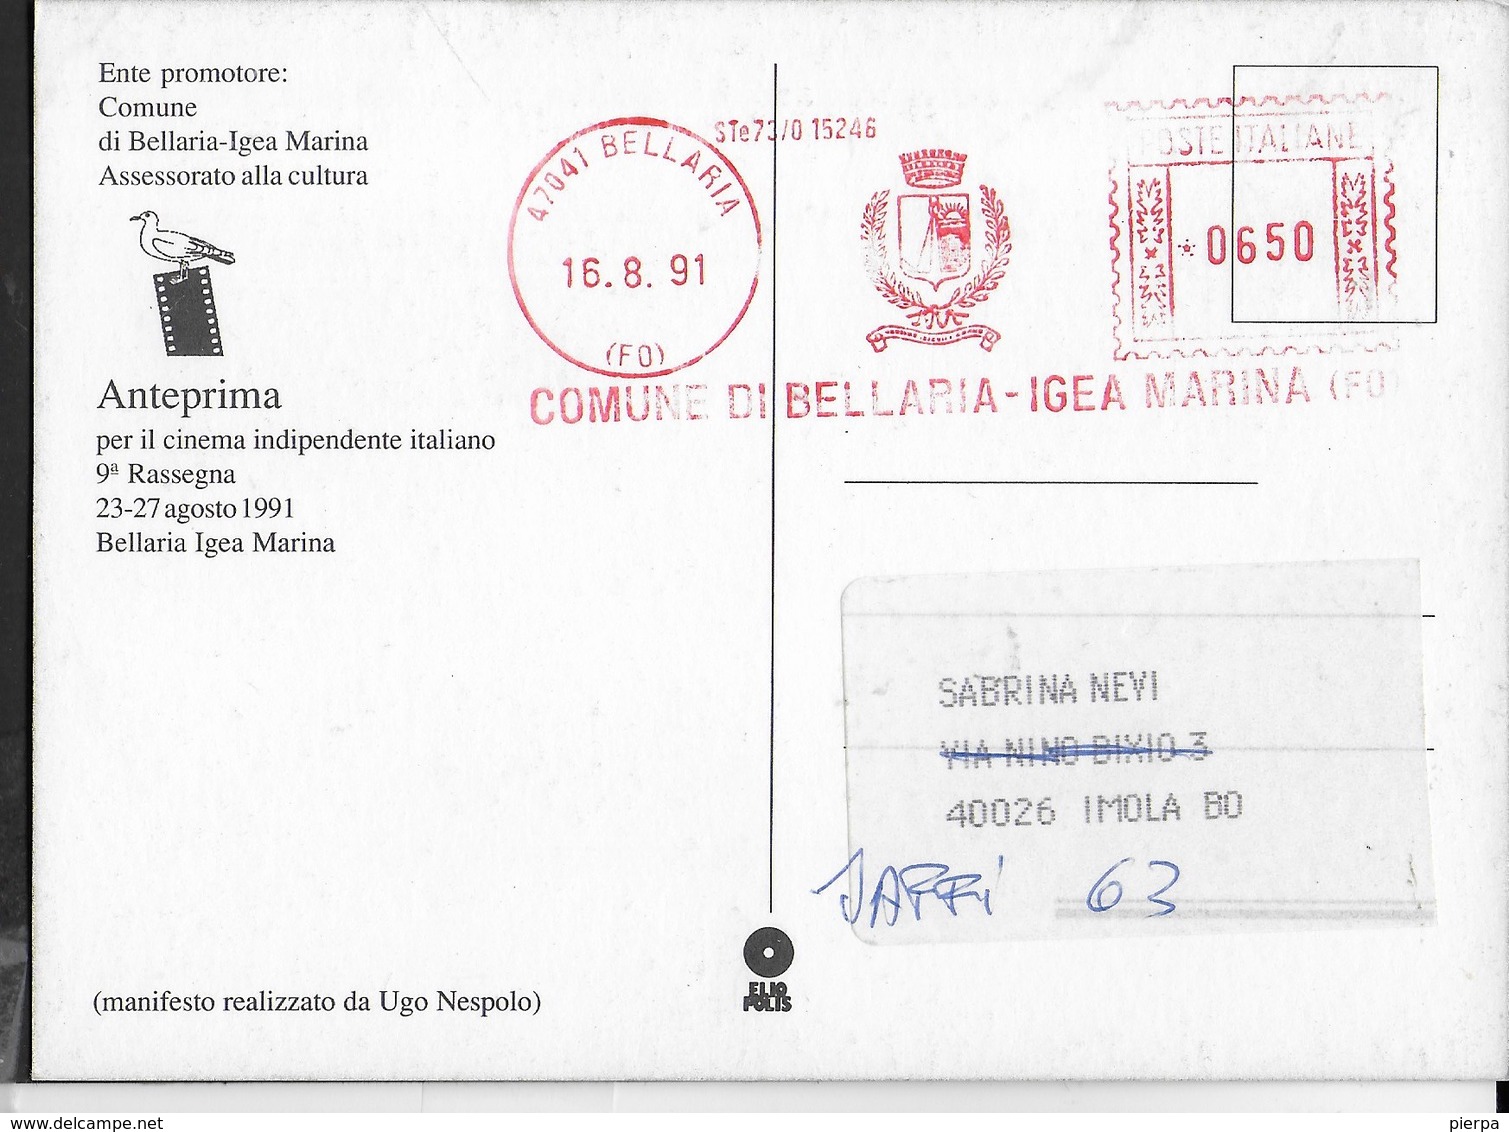 UGO NESPOLO - MANIFESTO PER ANTEPRIMA - 9a RASSEGNA CINEMA INDIPENDENTE - BELLARIA - VIAGGIATA 1991 - Manifesti Su Carta